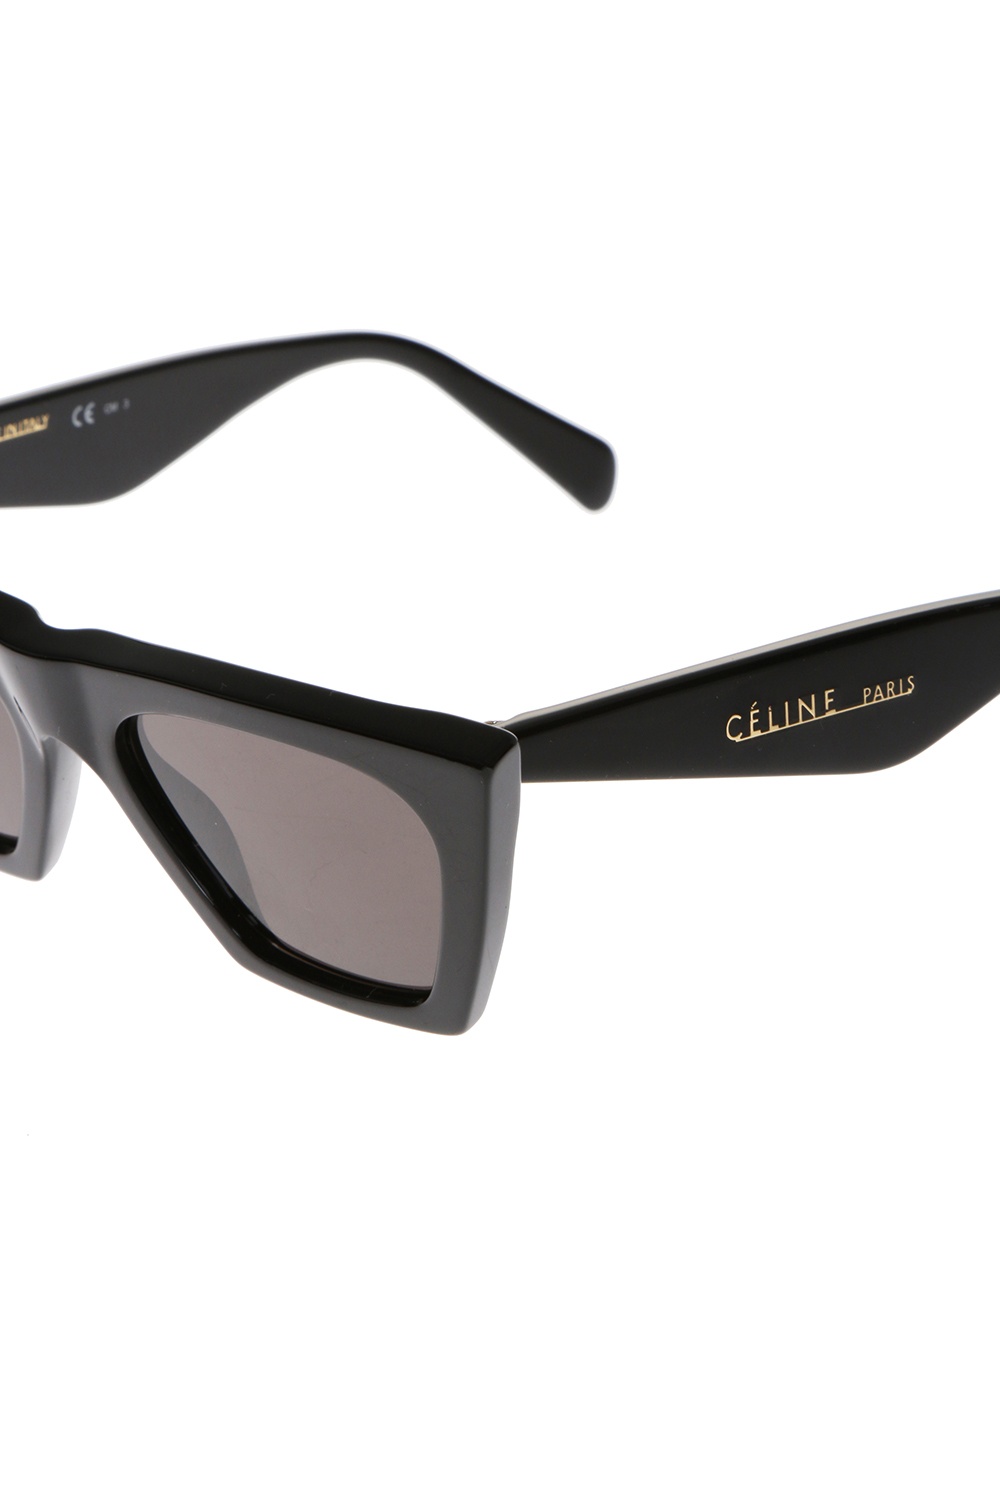 Glimp de elite Waardig Black 'Edge' sunglasses Celine - Vitkac Spain